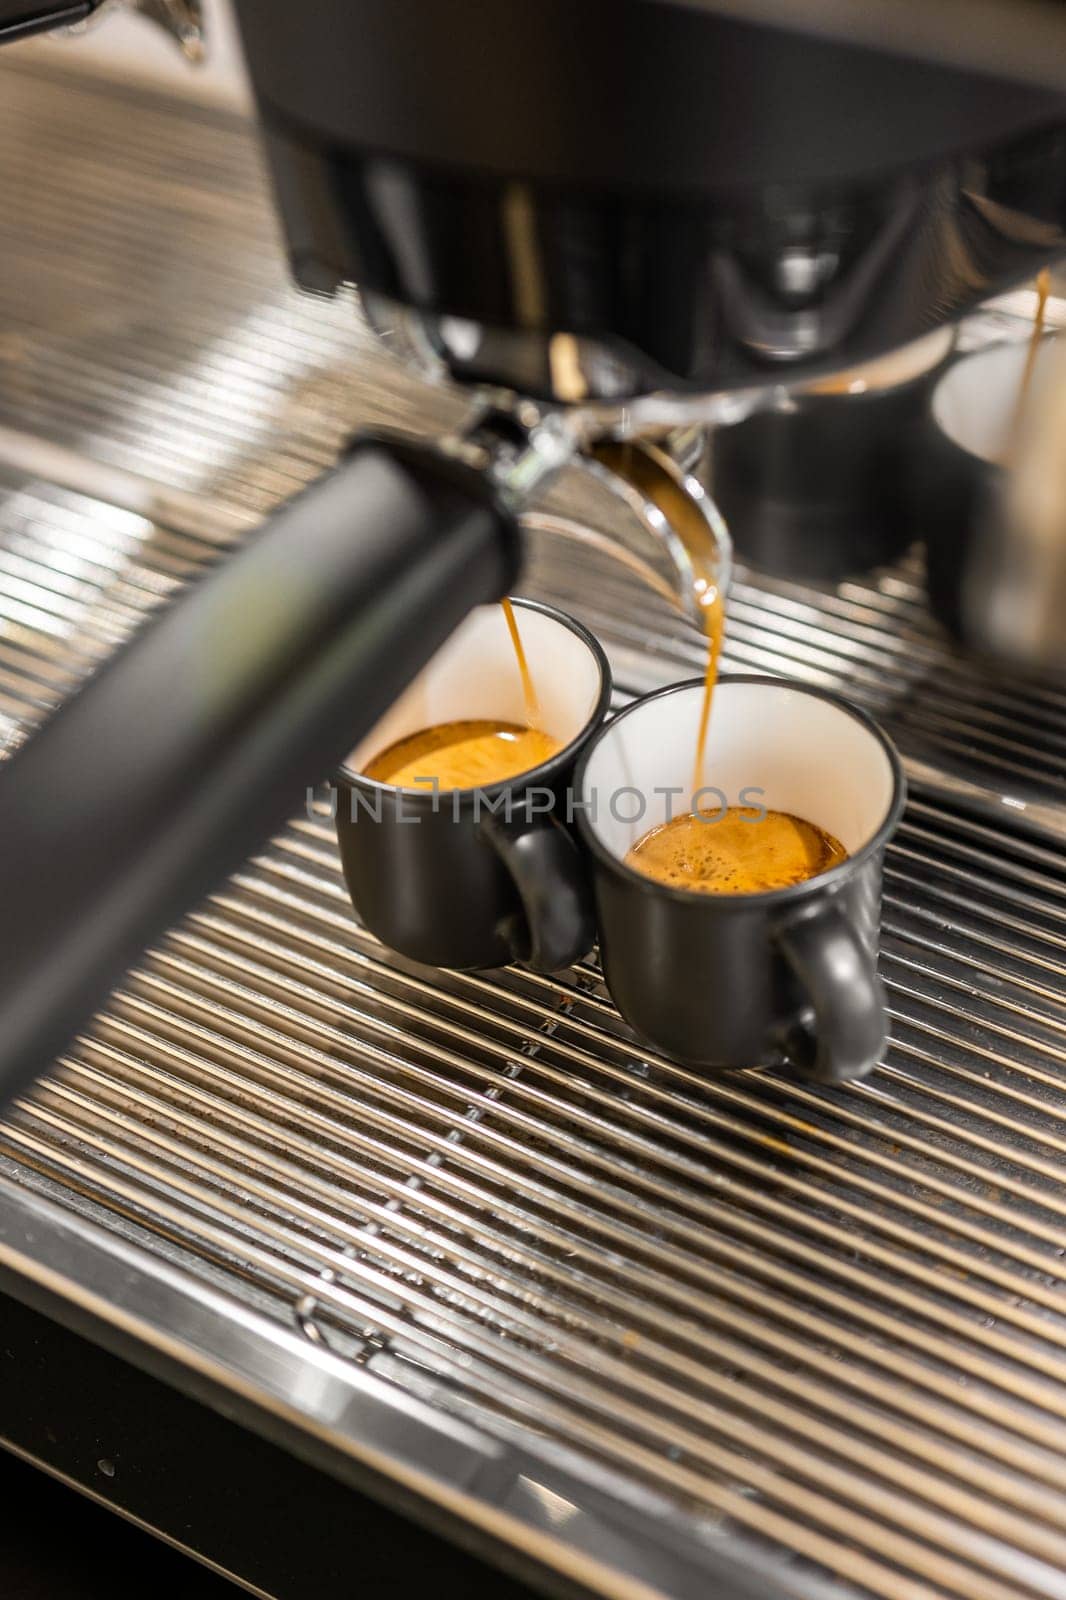 Fresh espresso streams into cups from a professional coffee machine.